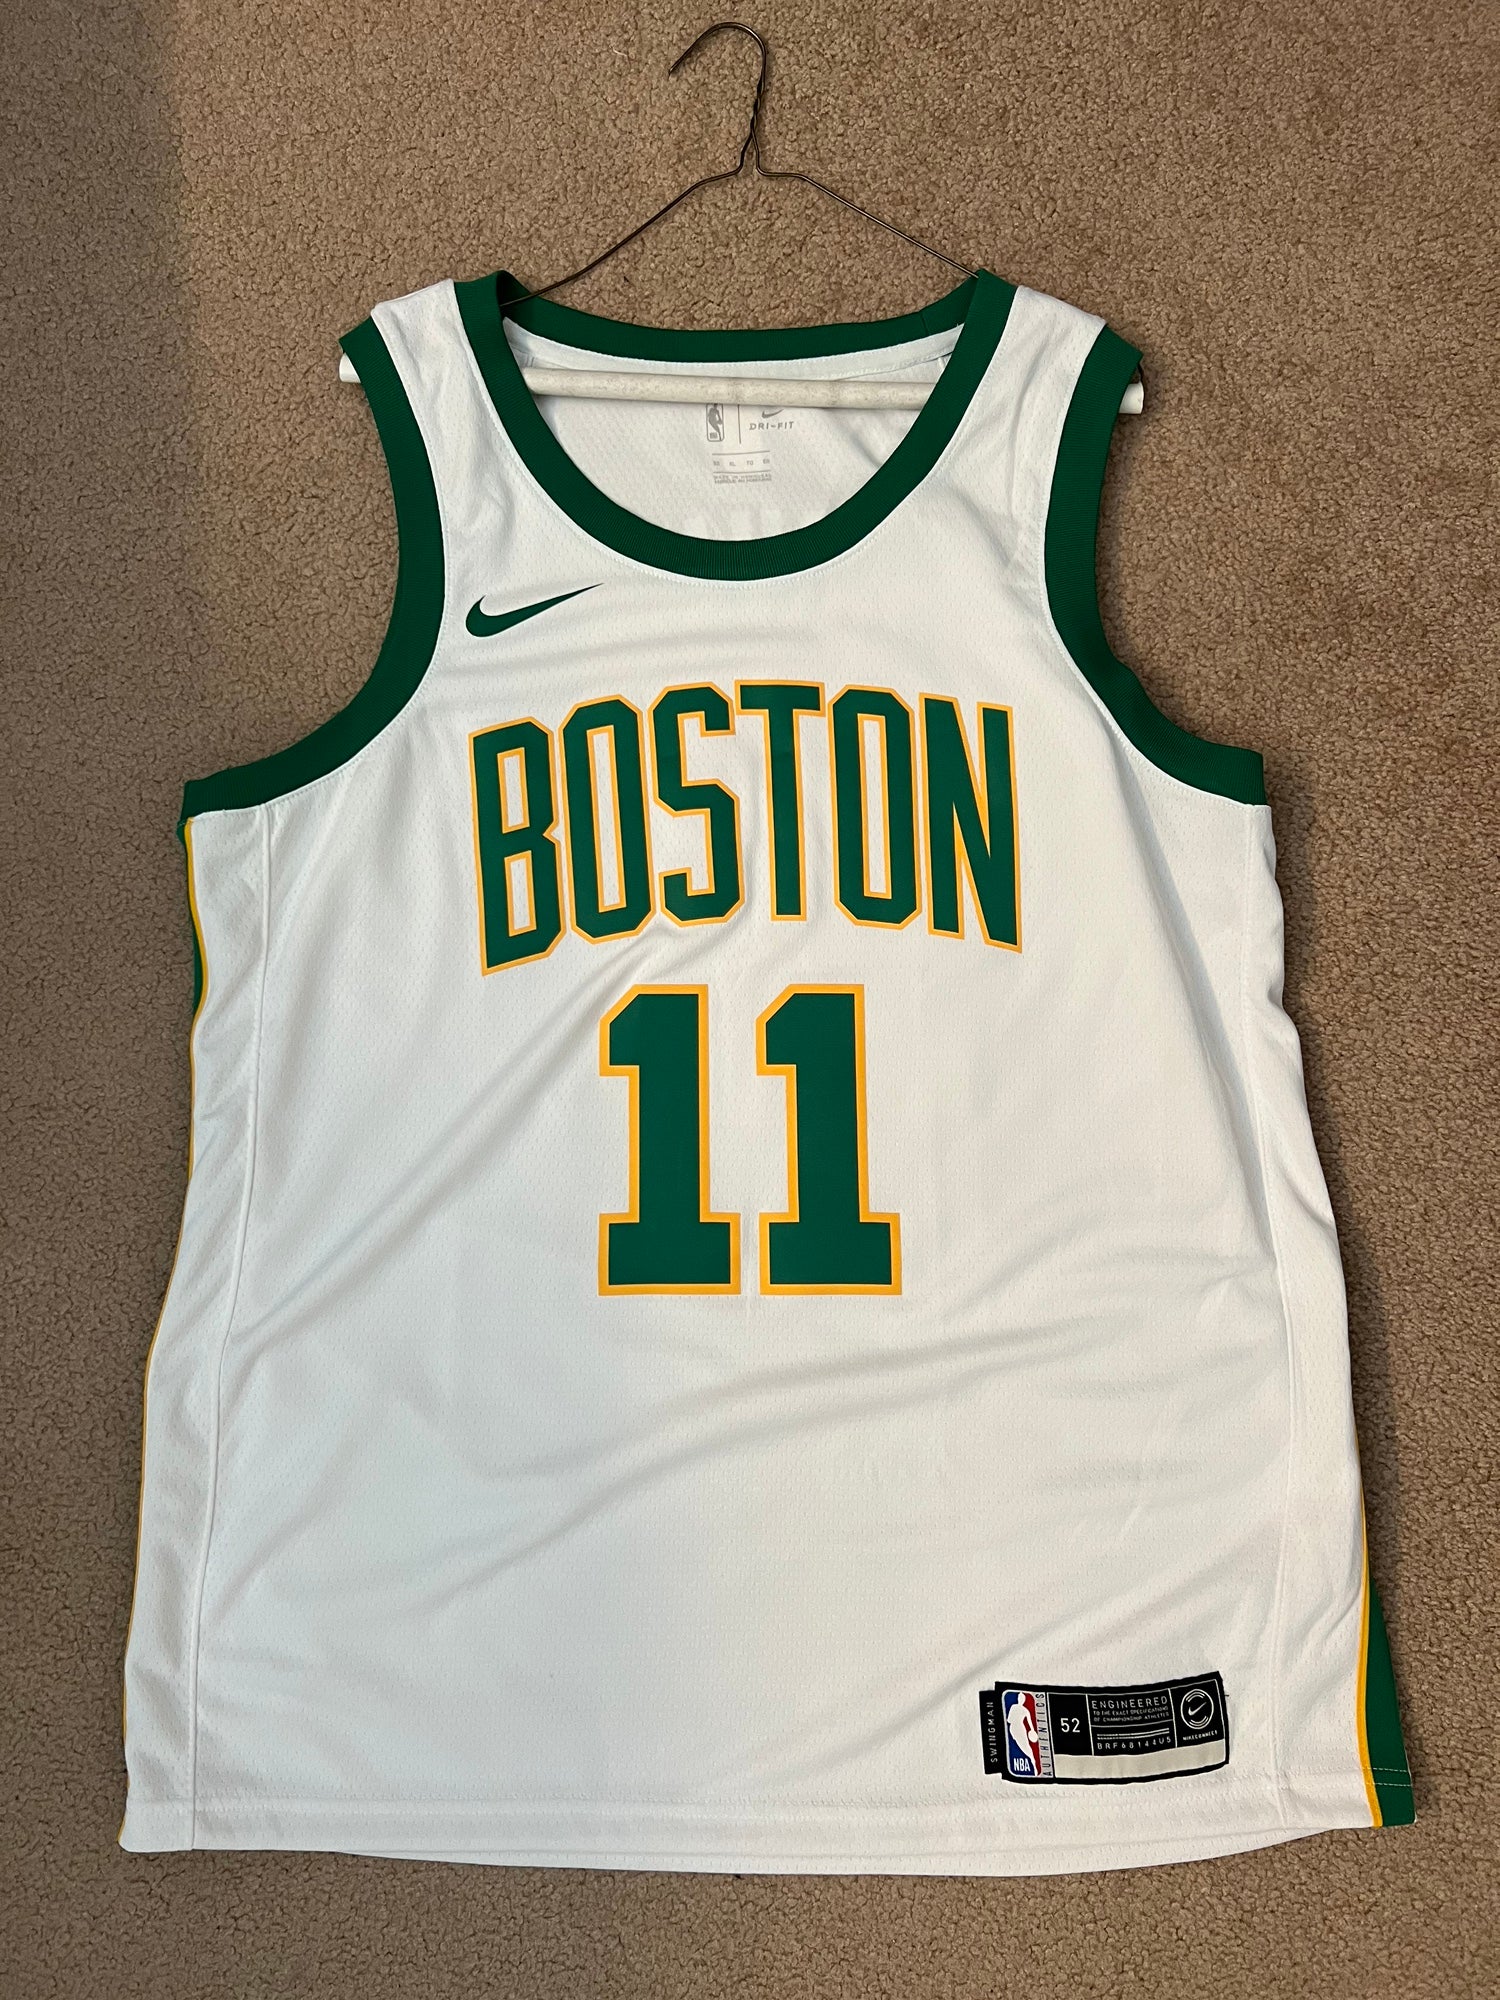 Fanatics NBA Boston Celtics White Jersey Kyrie Irving Men's Large Men Size  XL